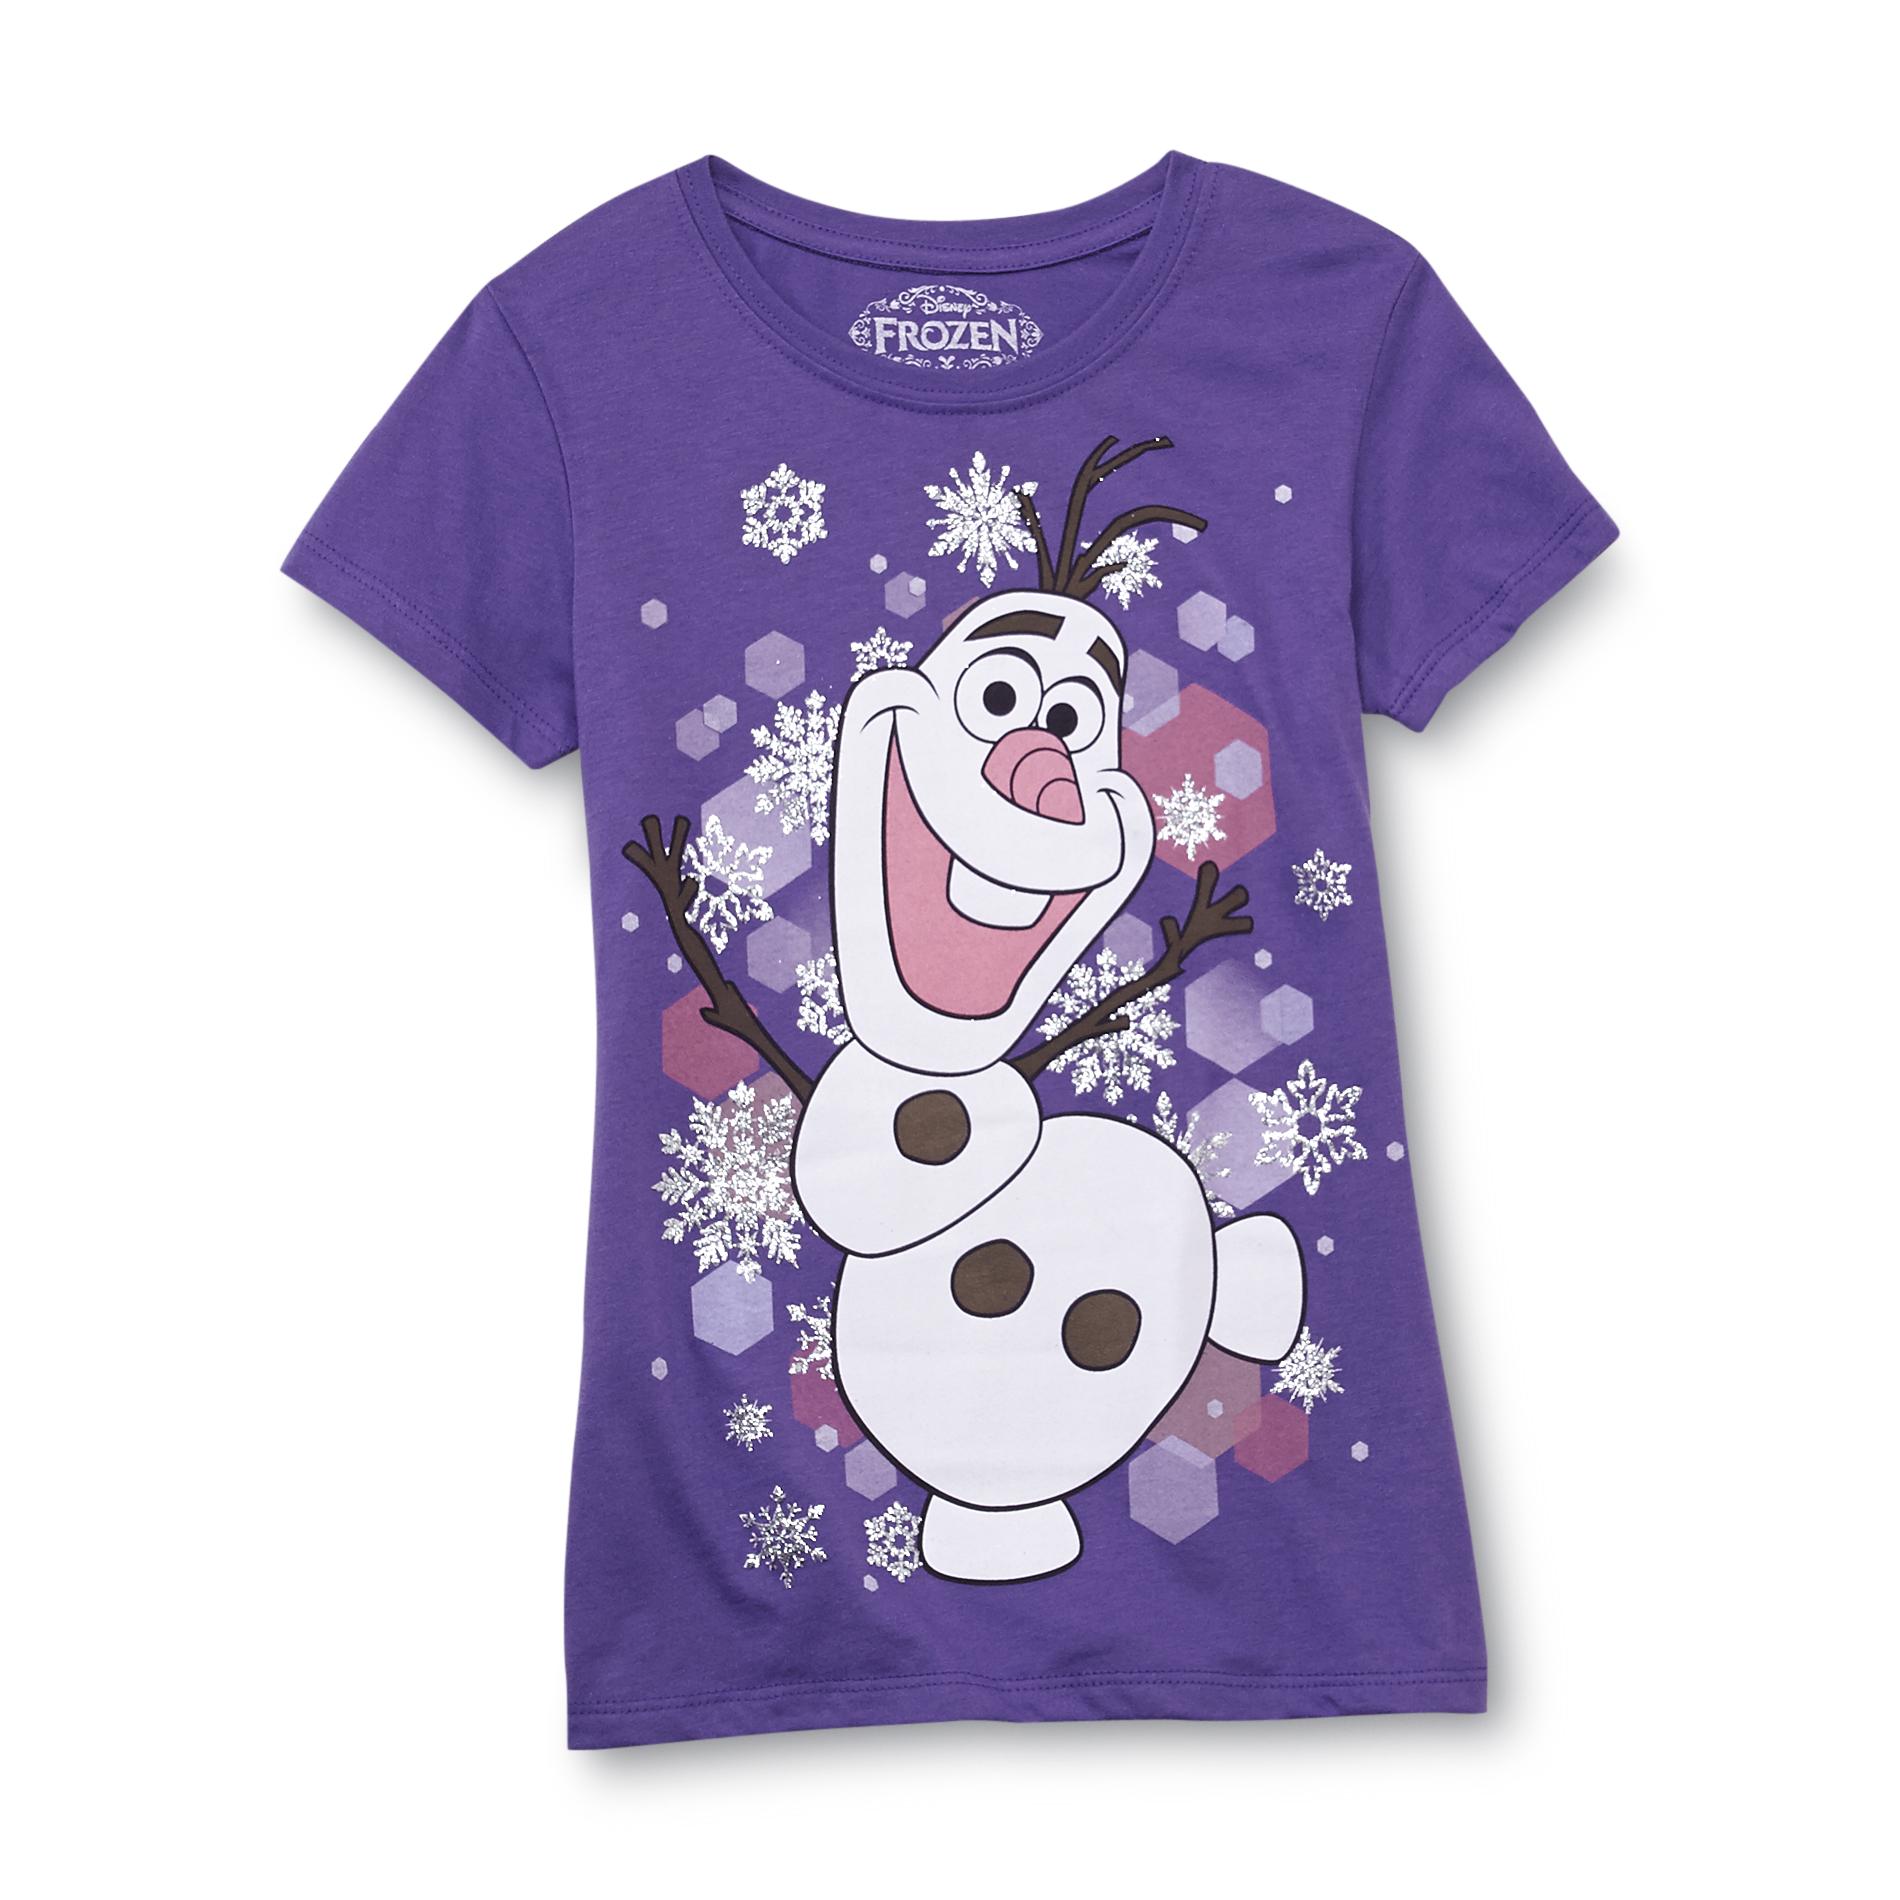 Disney Frozen Girl's Graphic T-Shirt - Olaf